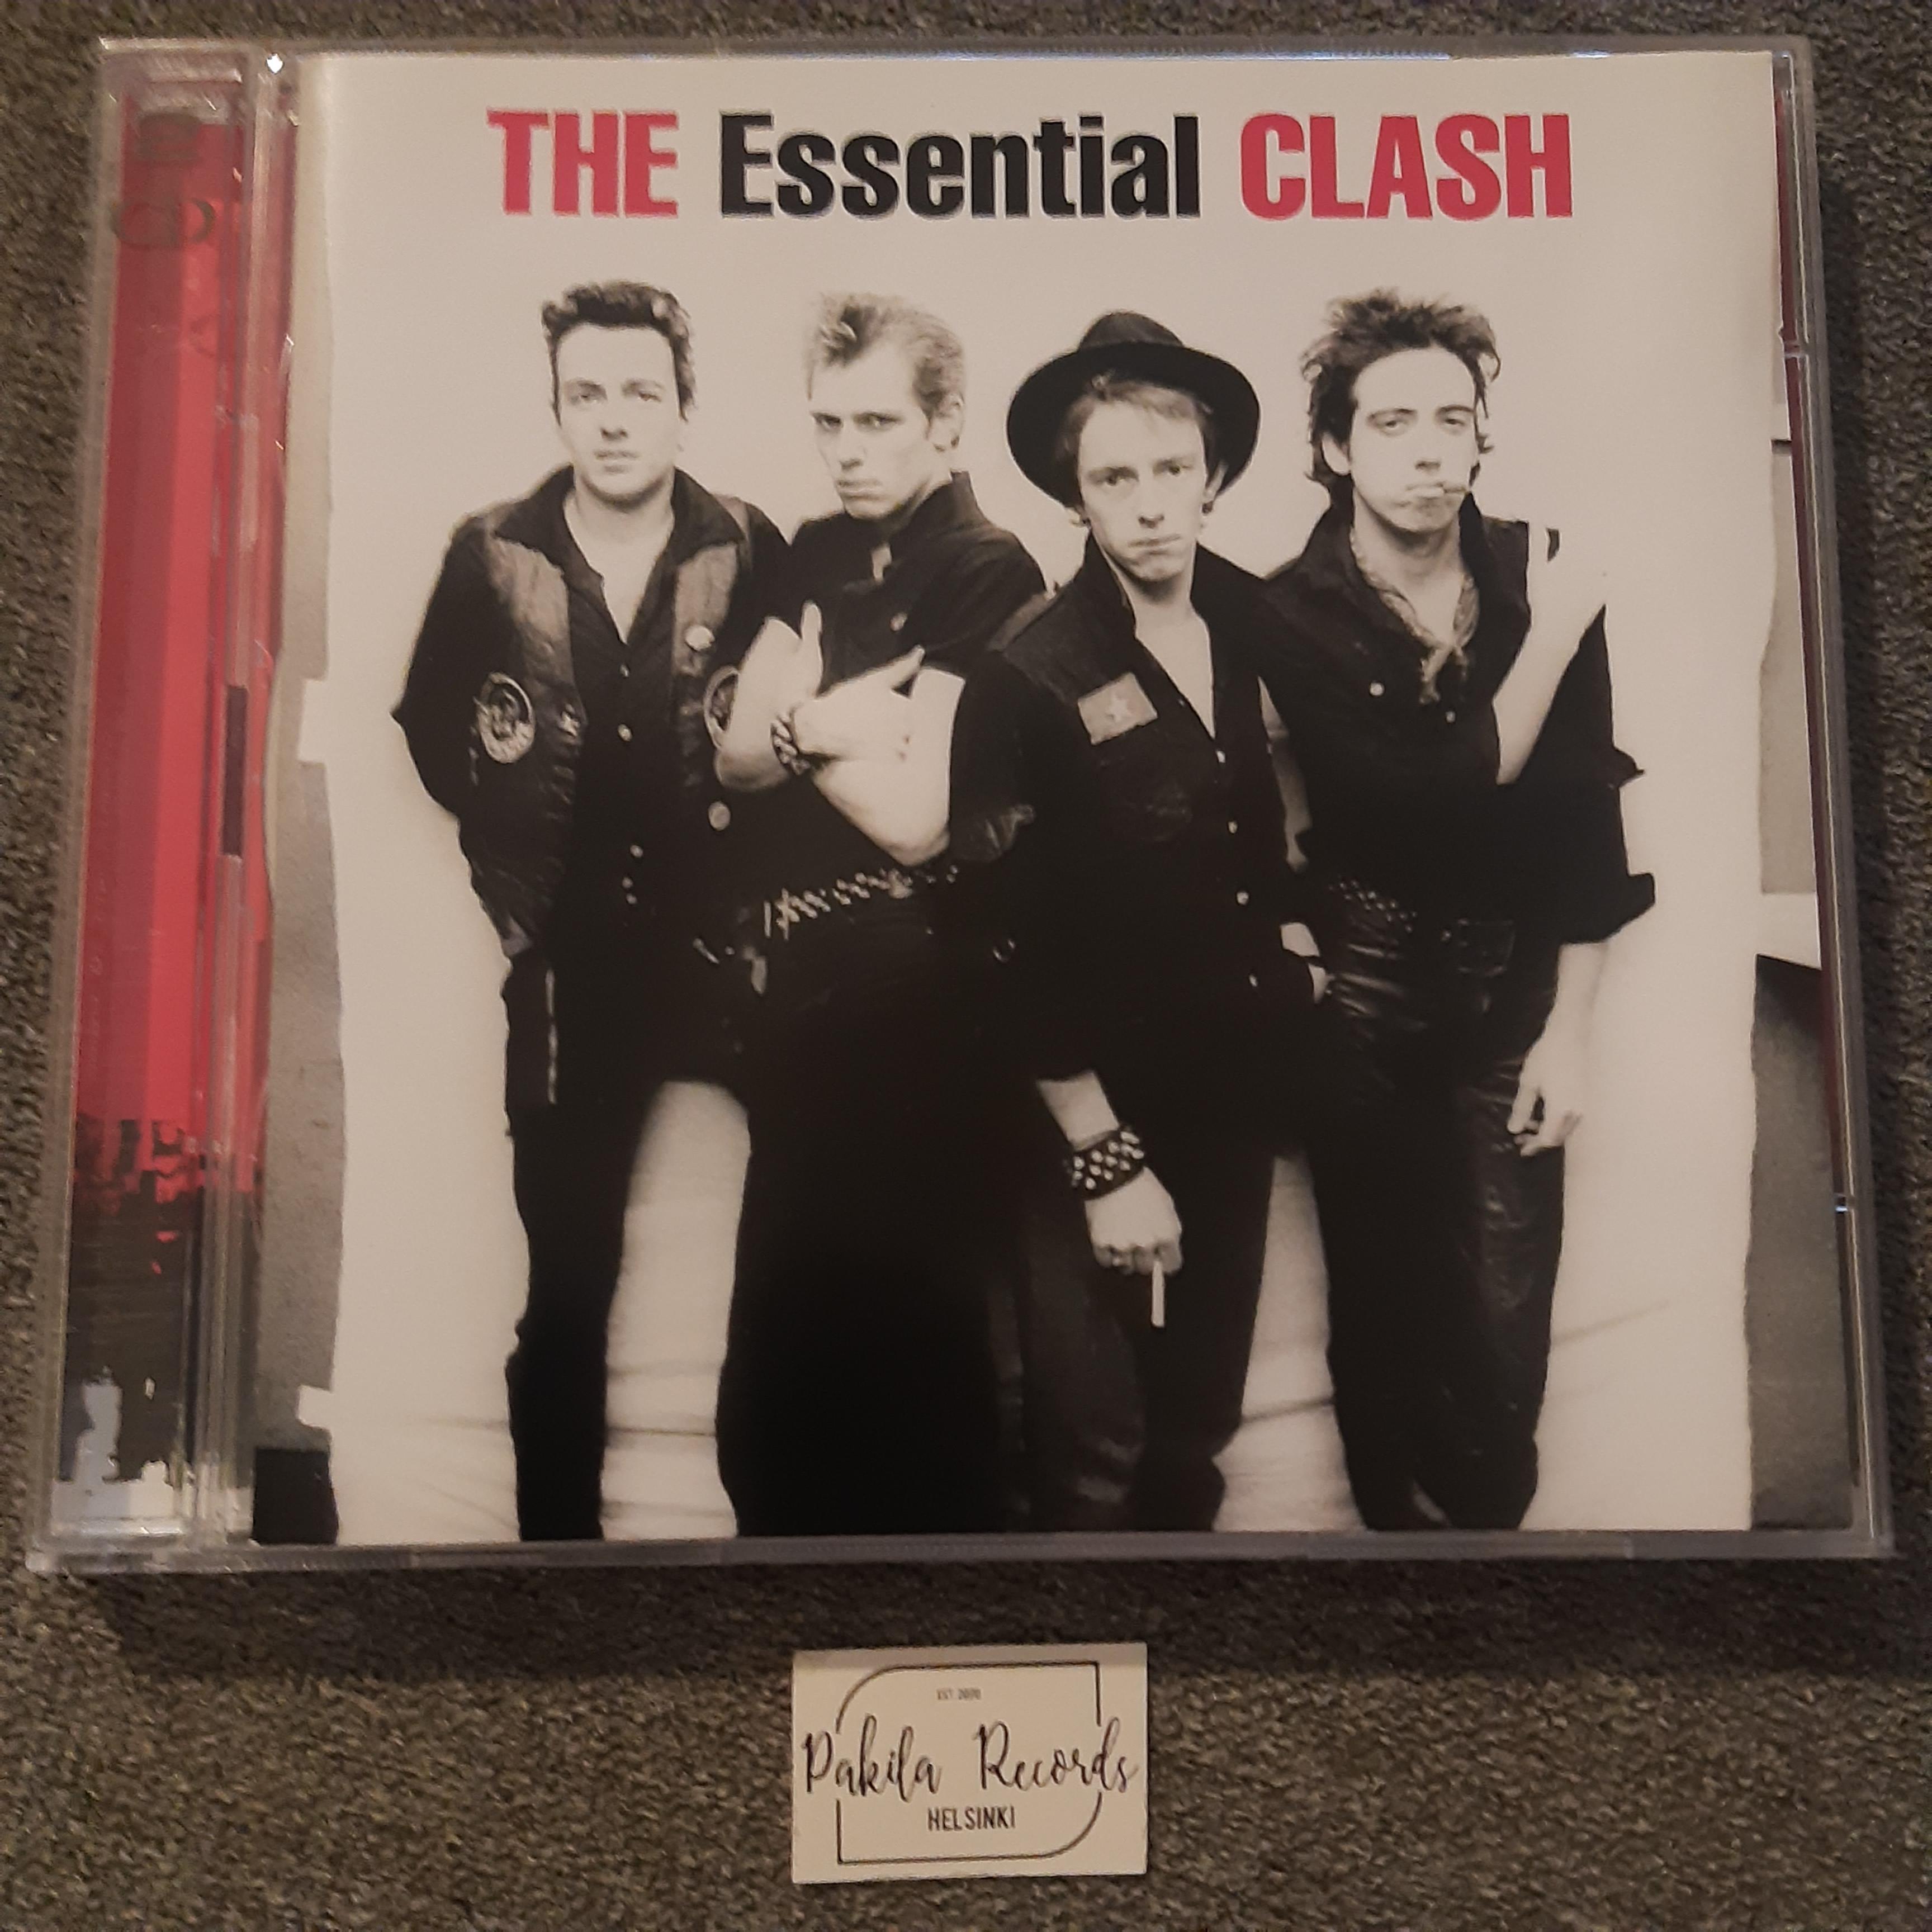 The Clash - The Essential Clash - 2 CD (käytetty)